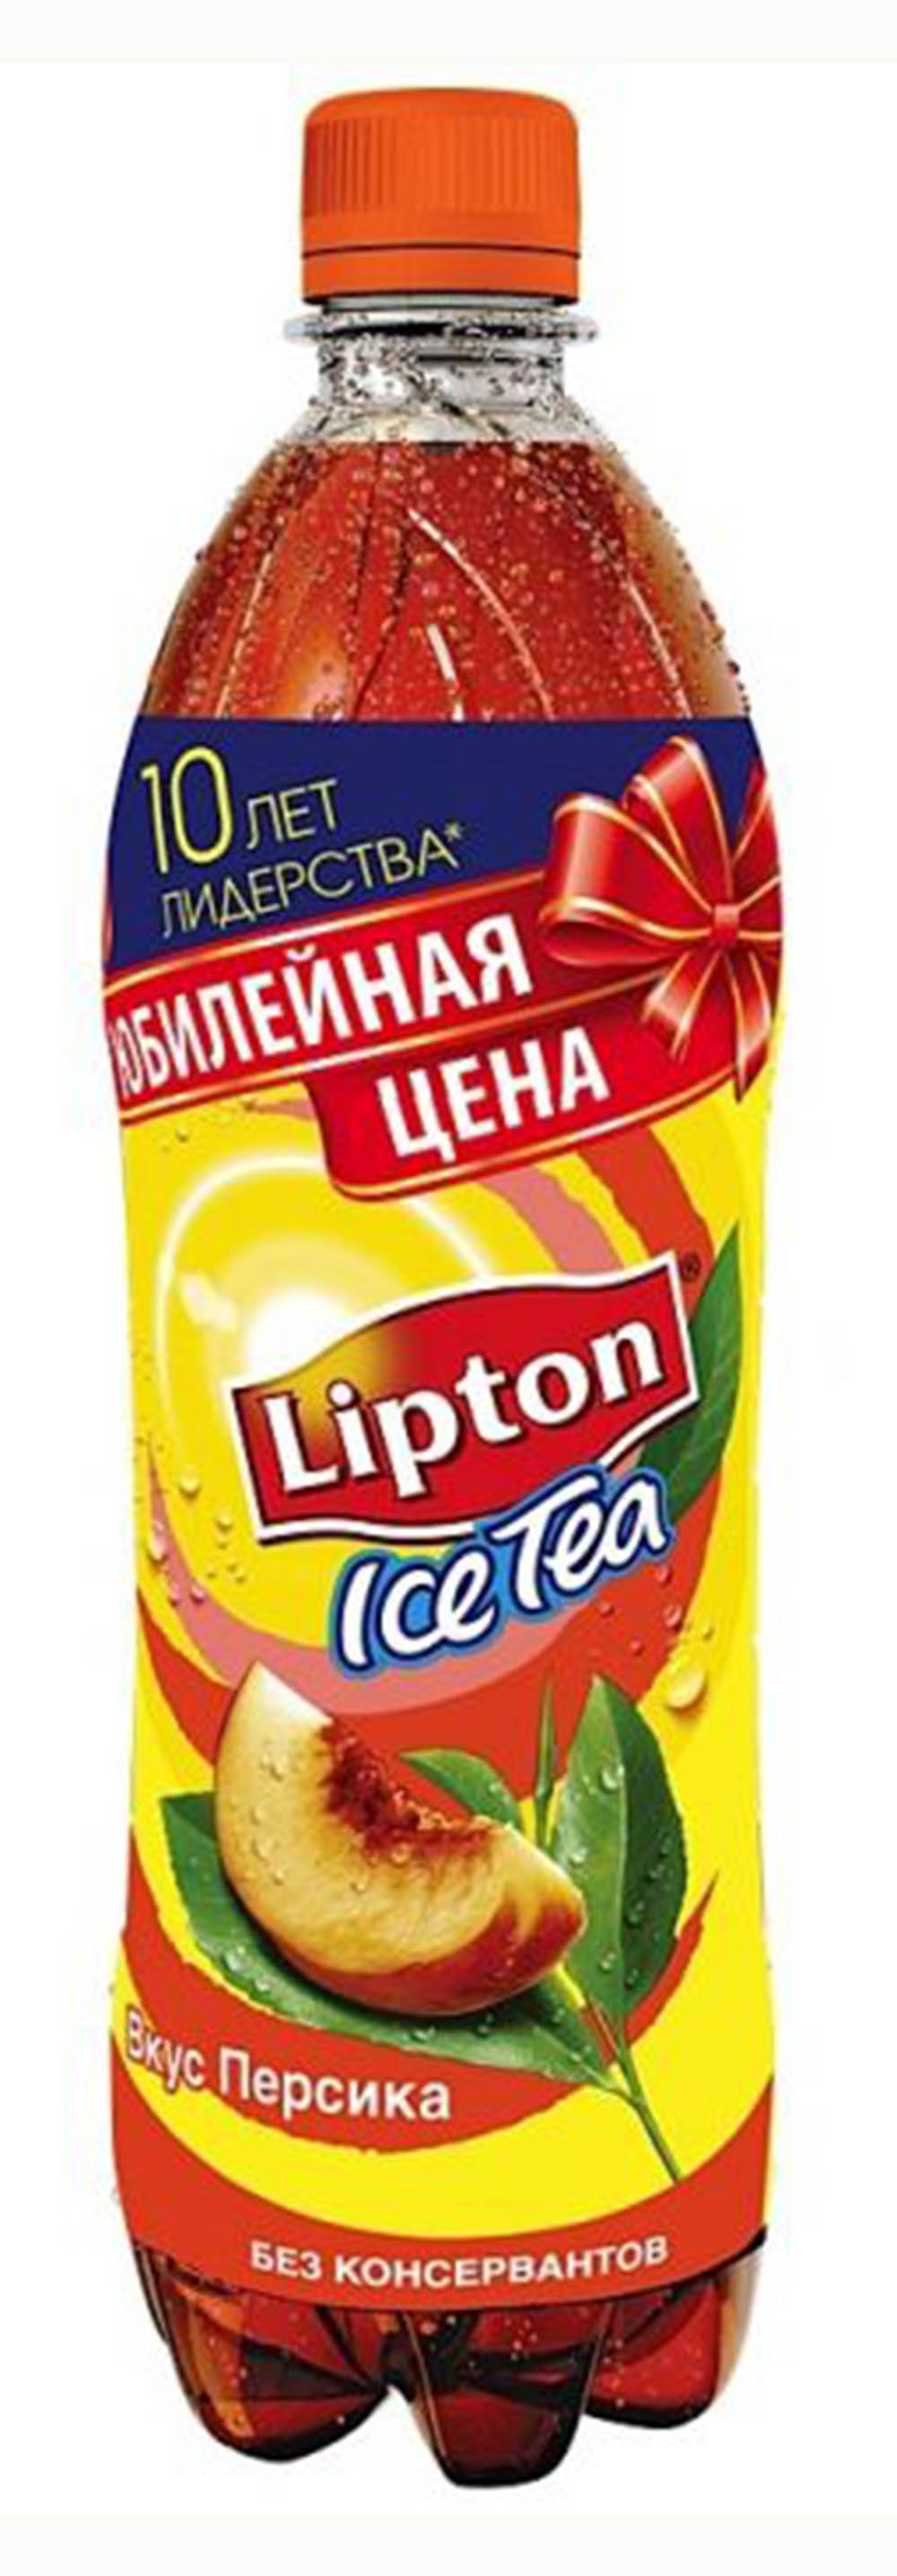 Напиток Липтон персик ''1.0'' л бут  - интернет-магазин Близнецы